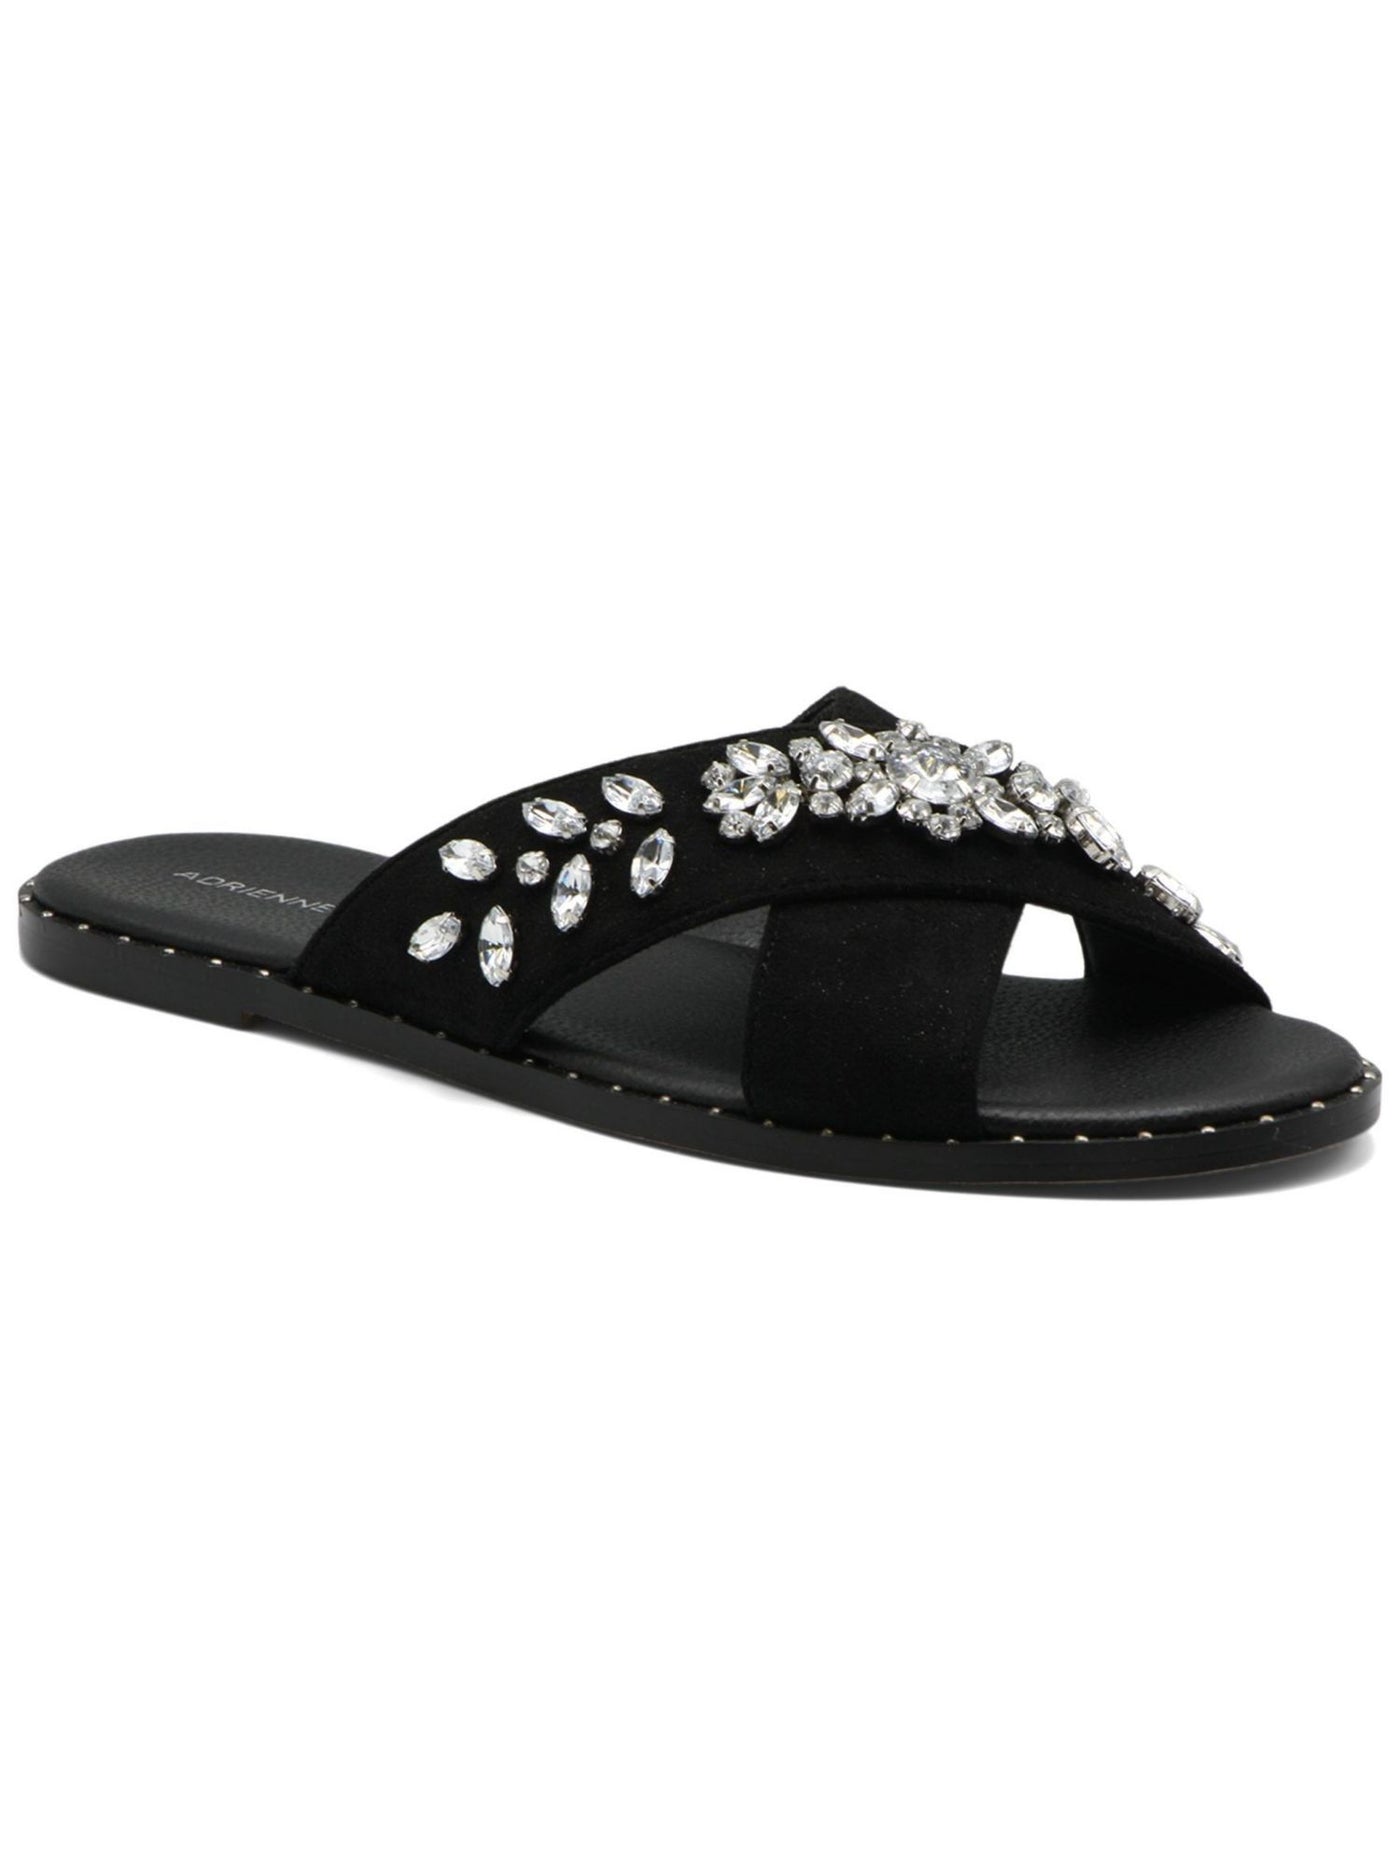 ADRIENNE VITTADINI Womens Black Shimmery Embellished Padded Faken Round Toe Slip On Slide Sandals Shoes 7 M